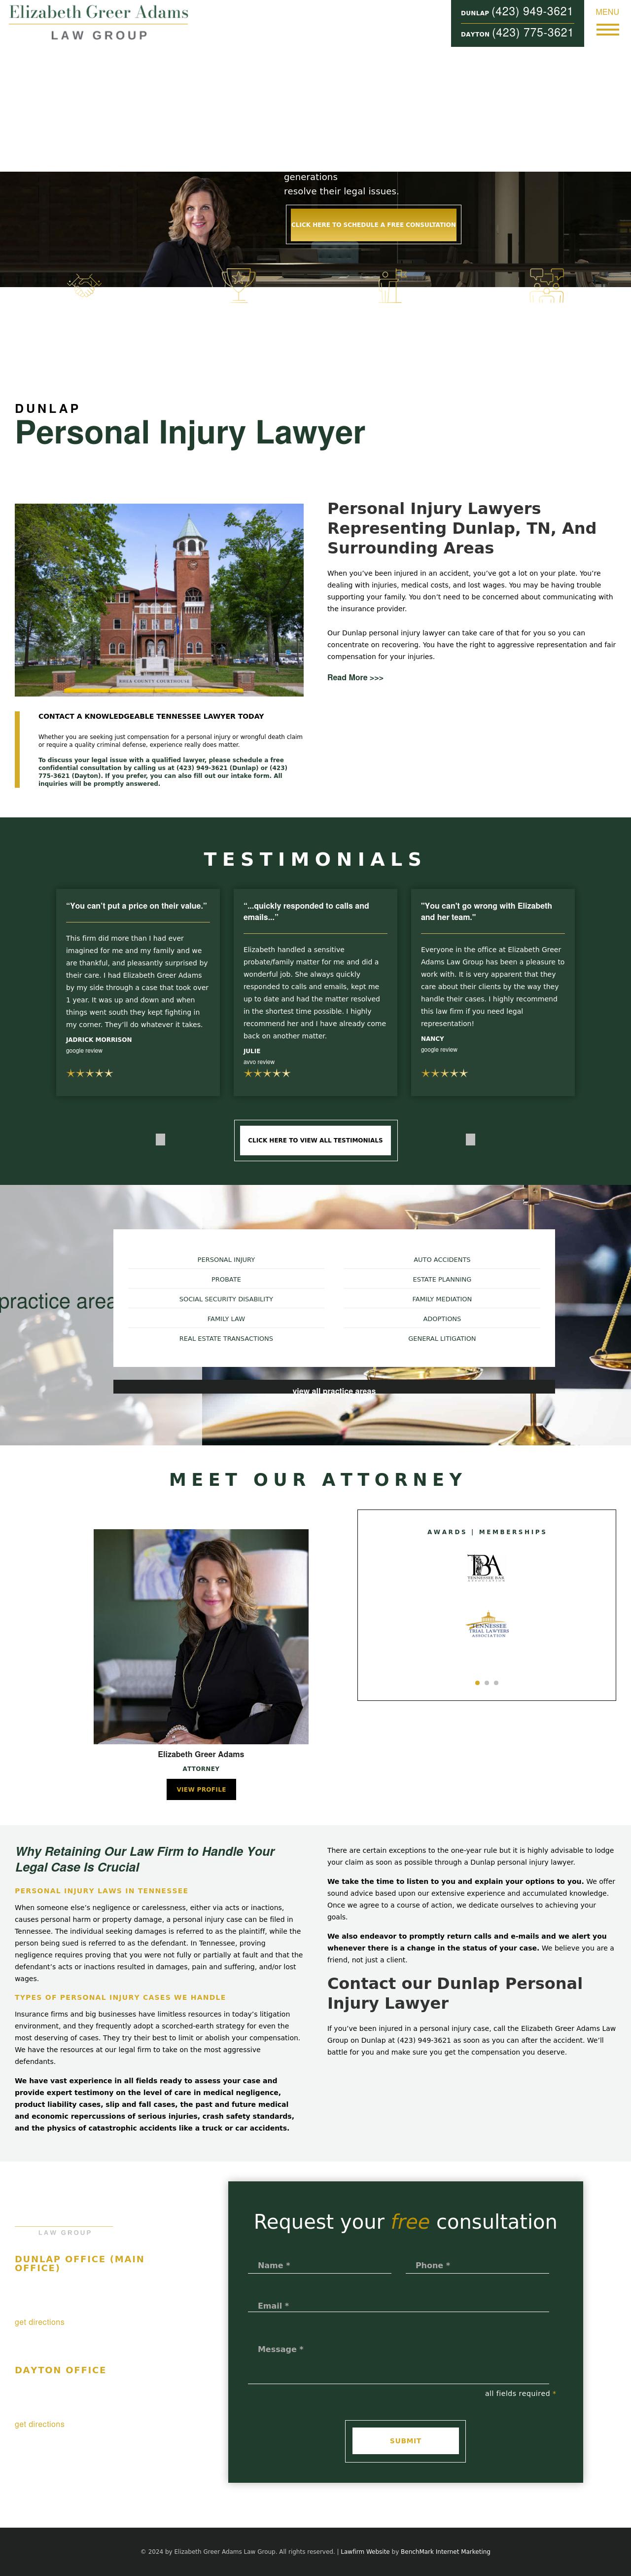 Elizabeth Greer Adams Law Group - Dunlap TN Lawyers